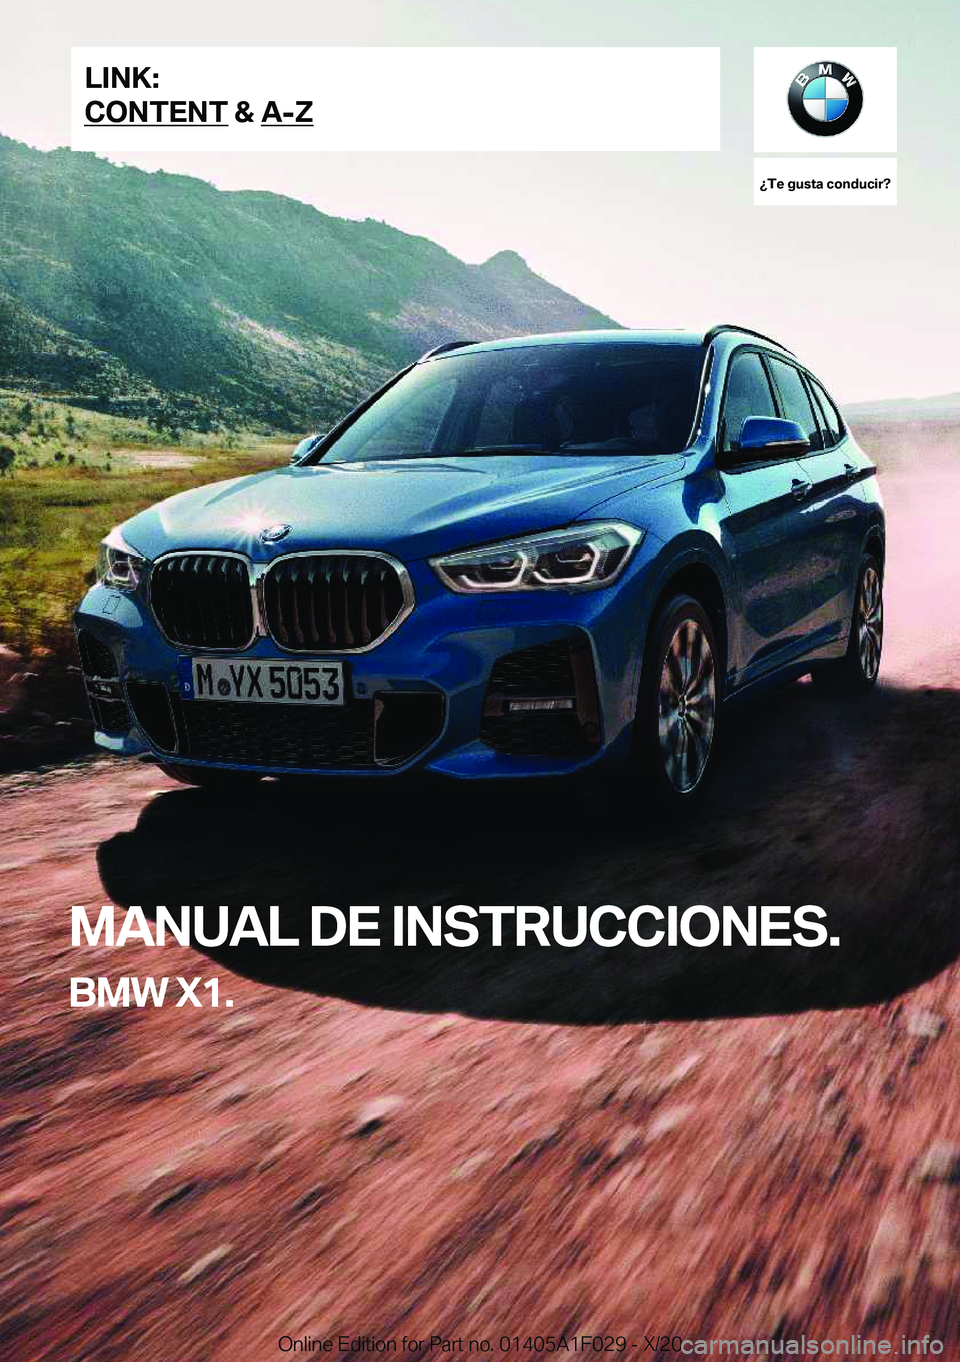 BMW X1 2021  Manuales de Empleo (in Spanish) ��T�e��g�u�s�t�a��c�o�n�d�u�c�i�r� 
�M�A�N�U�A�L��D�E��I�N�S�T�R�U�C�C�I�O�N�E�S�.
�B�M�W��X�1�.�L�I�N�K�:
�C�O�N�T�E�N�T��&��A�-�Z�O�n�l�i�n�e��E�d�i�t�i�o�n��f�o�r��P�a�r�t��n�o�.��0�1�